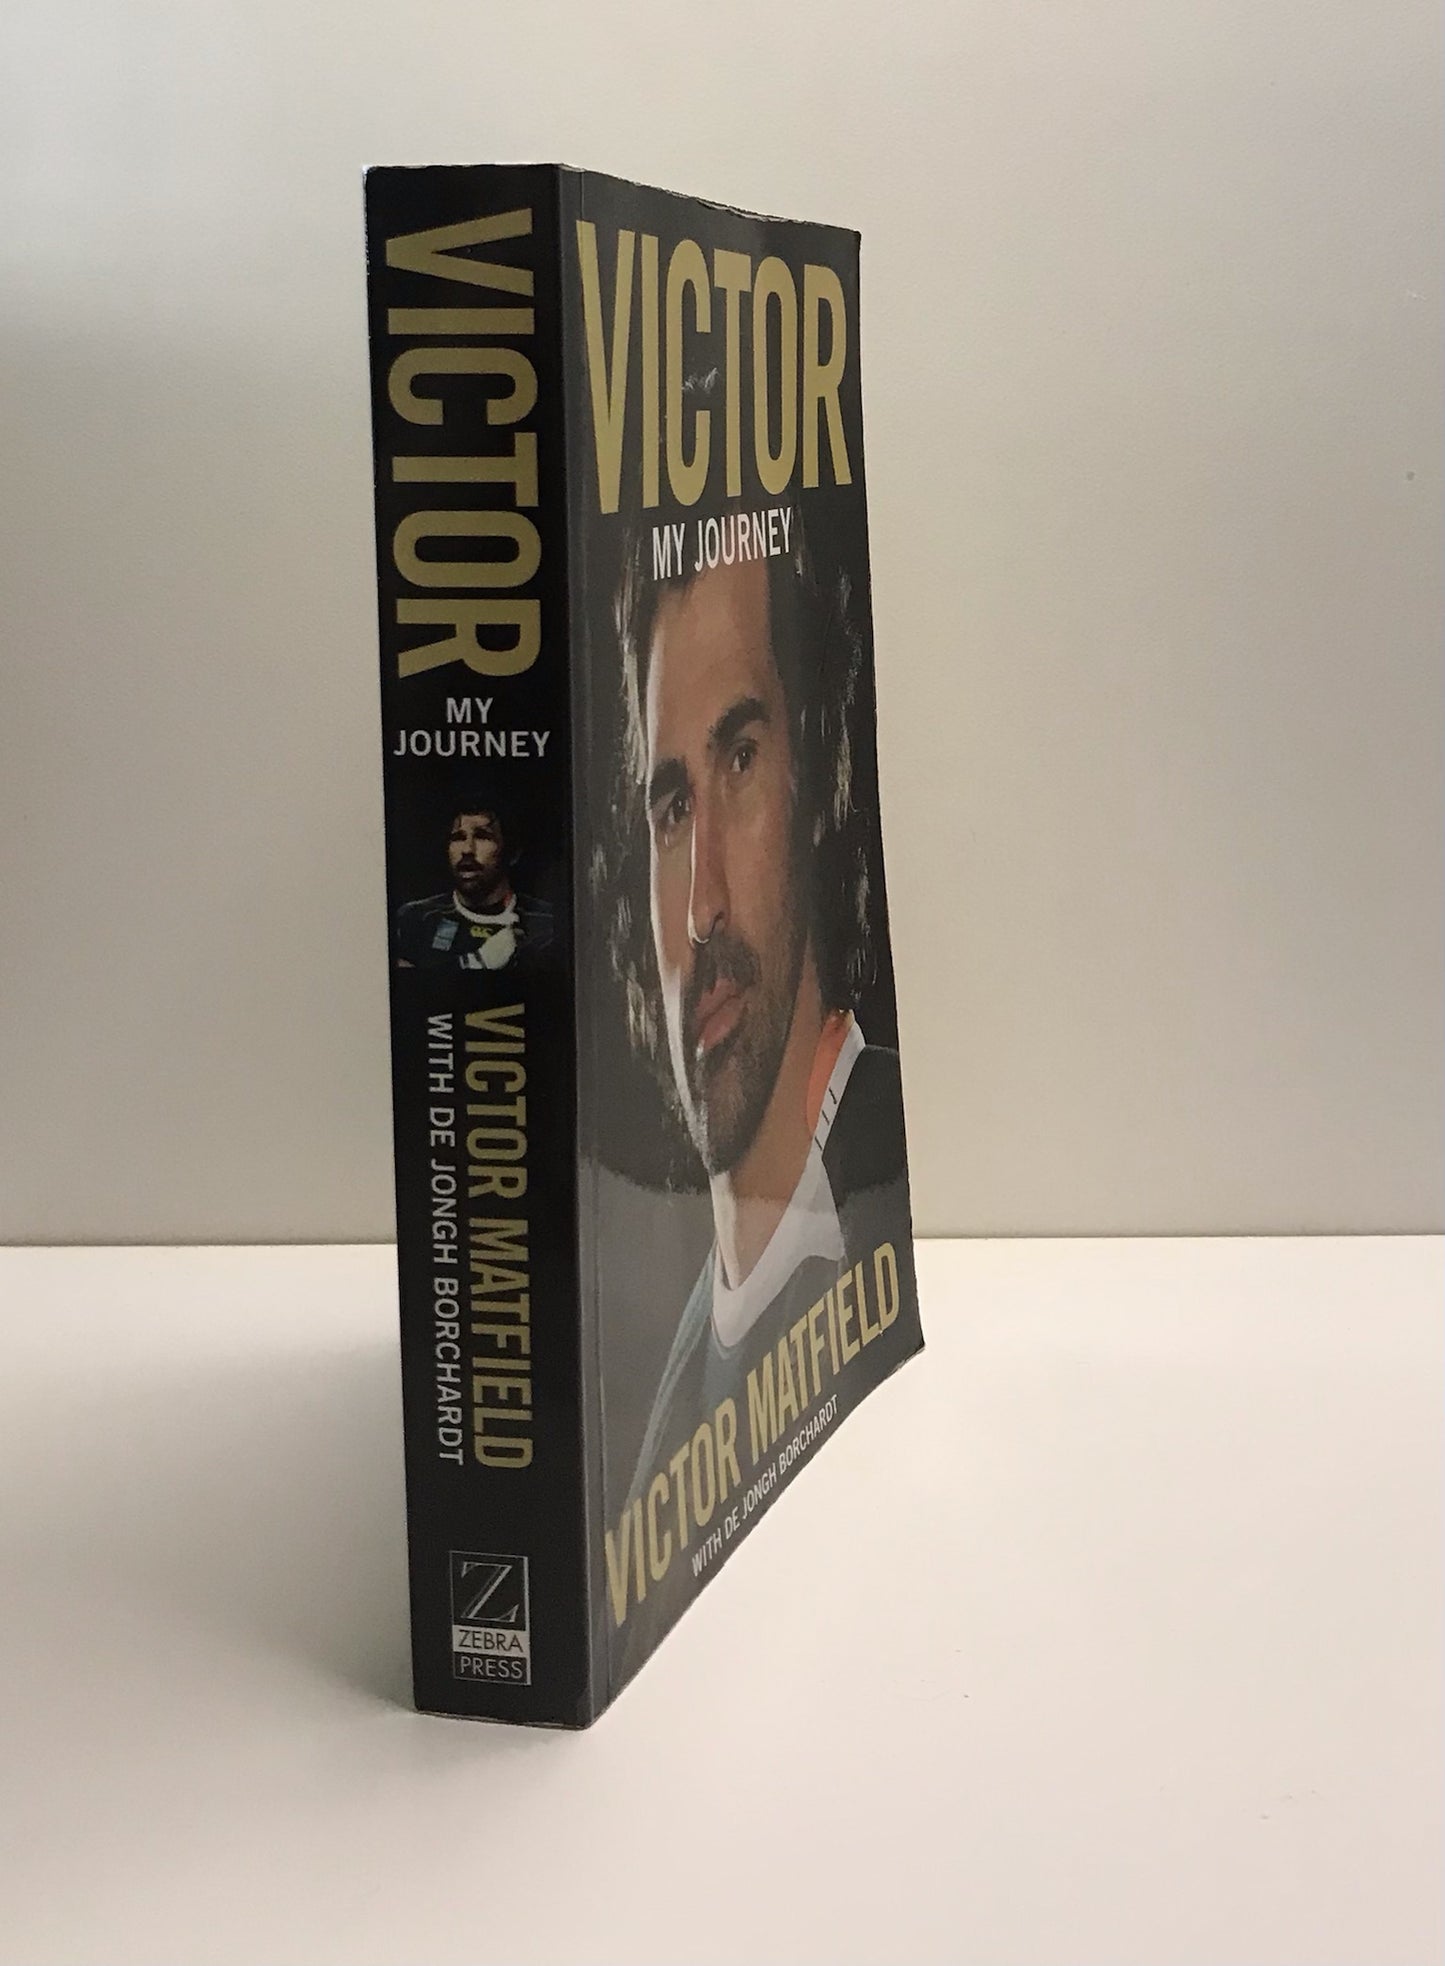 Victor: My journey - De Jongh Borchardt (First edition)